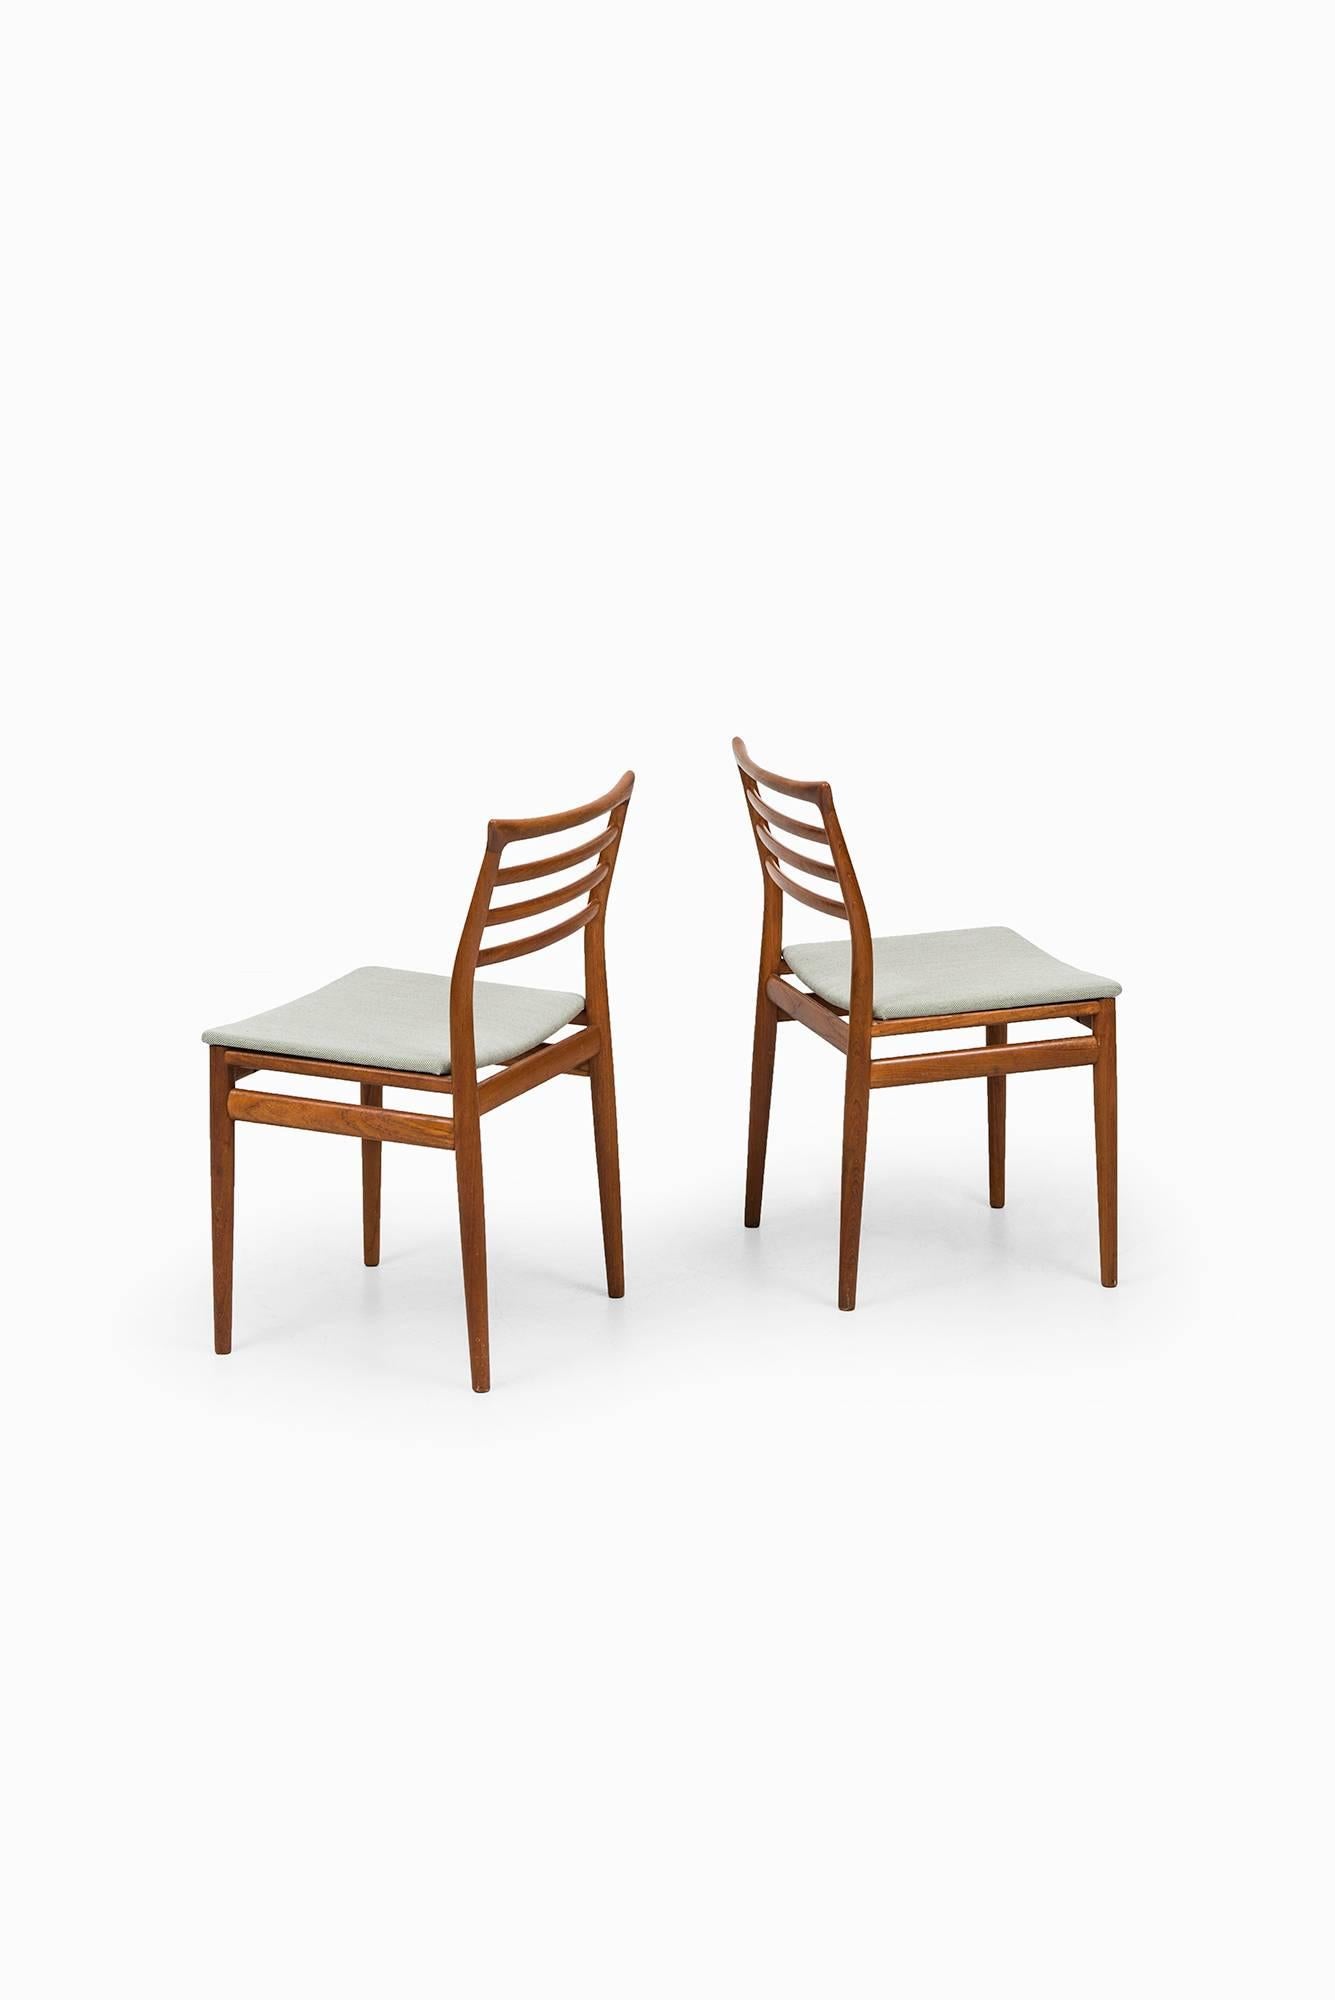 Danish Erling Torvits Dining Chairs by Soro Stolefabrik in Denmark